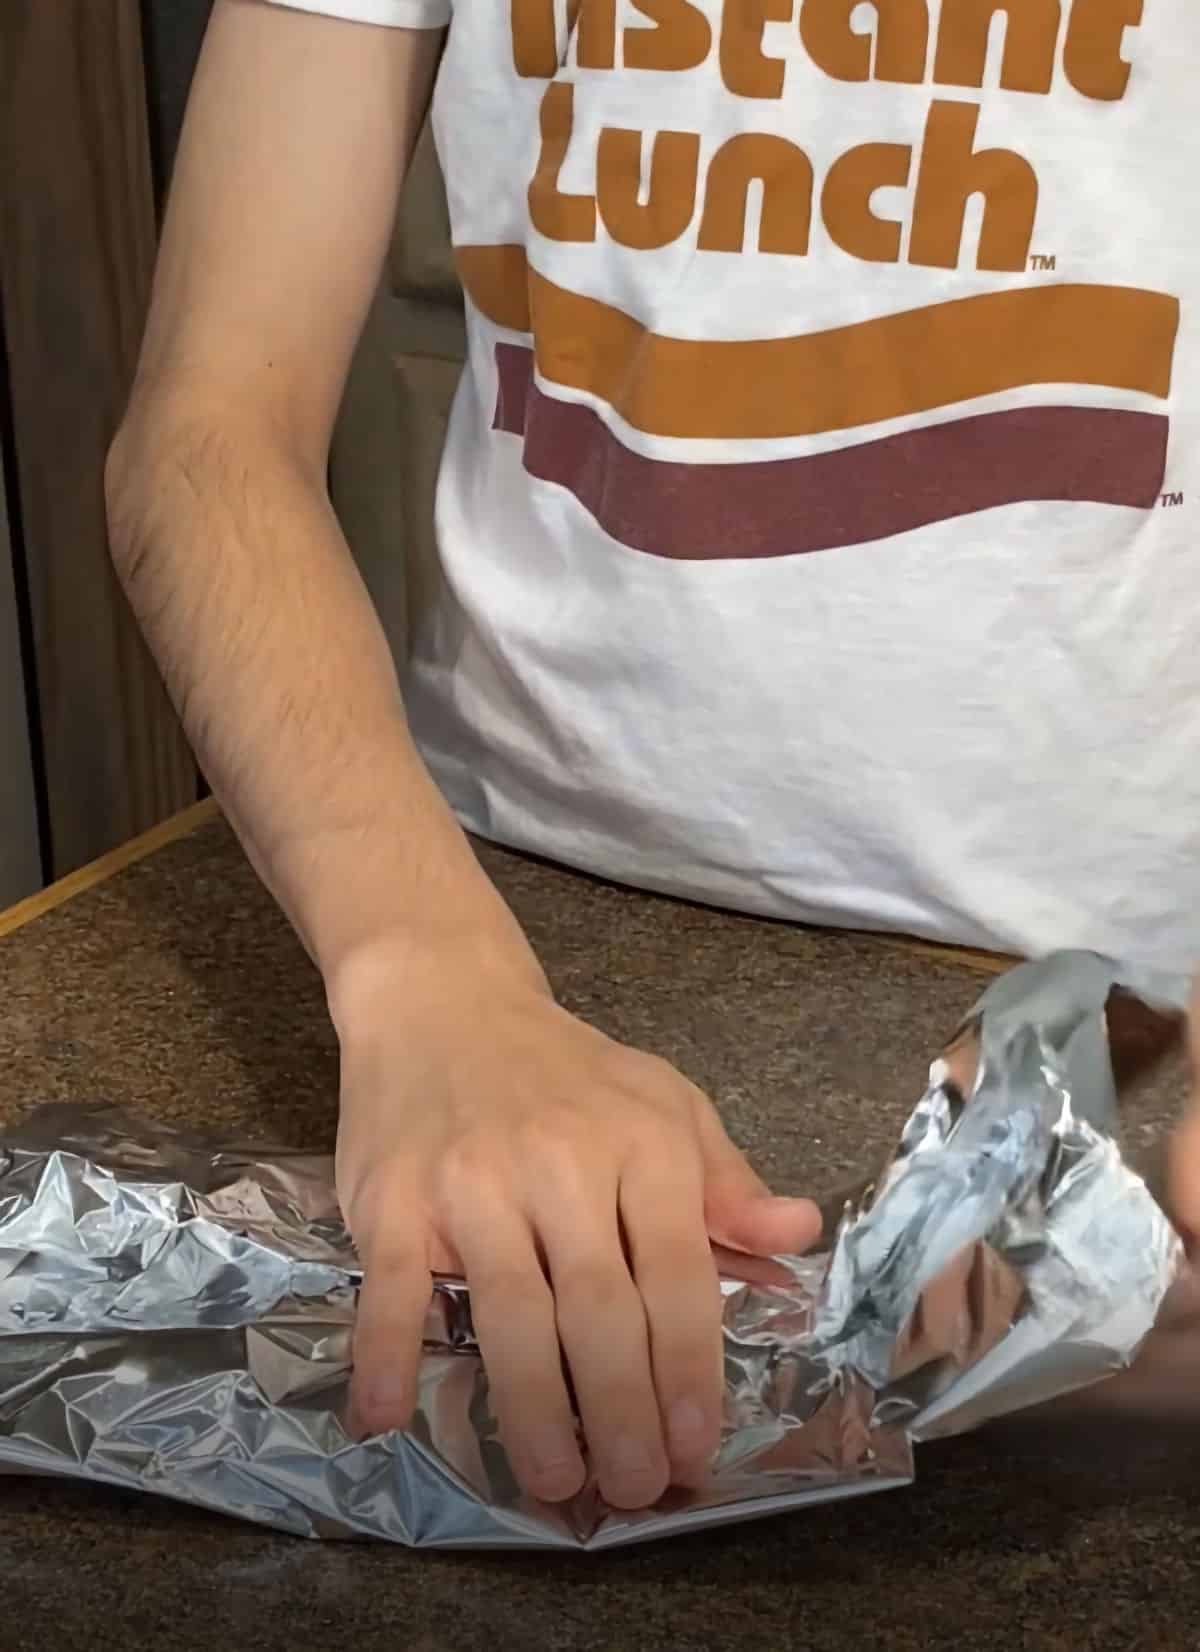 wrap venison burger into a foil packet for cooking